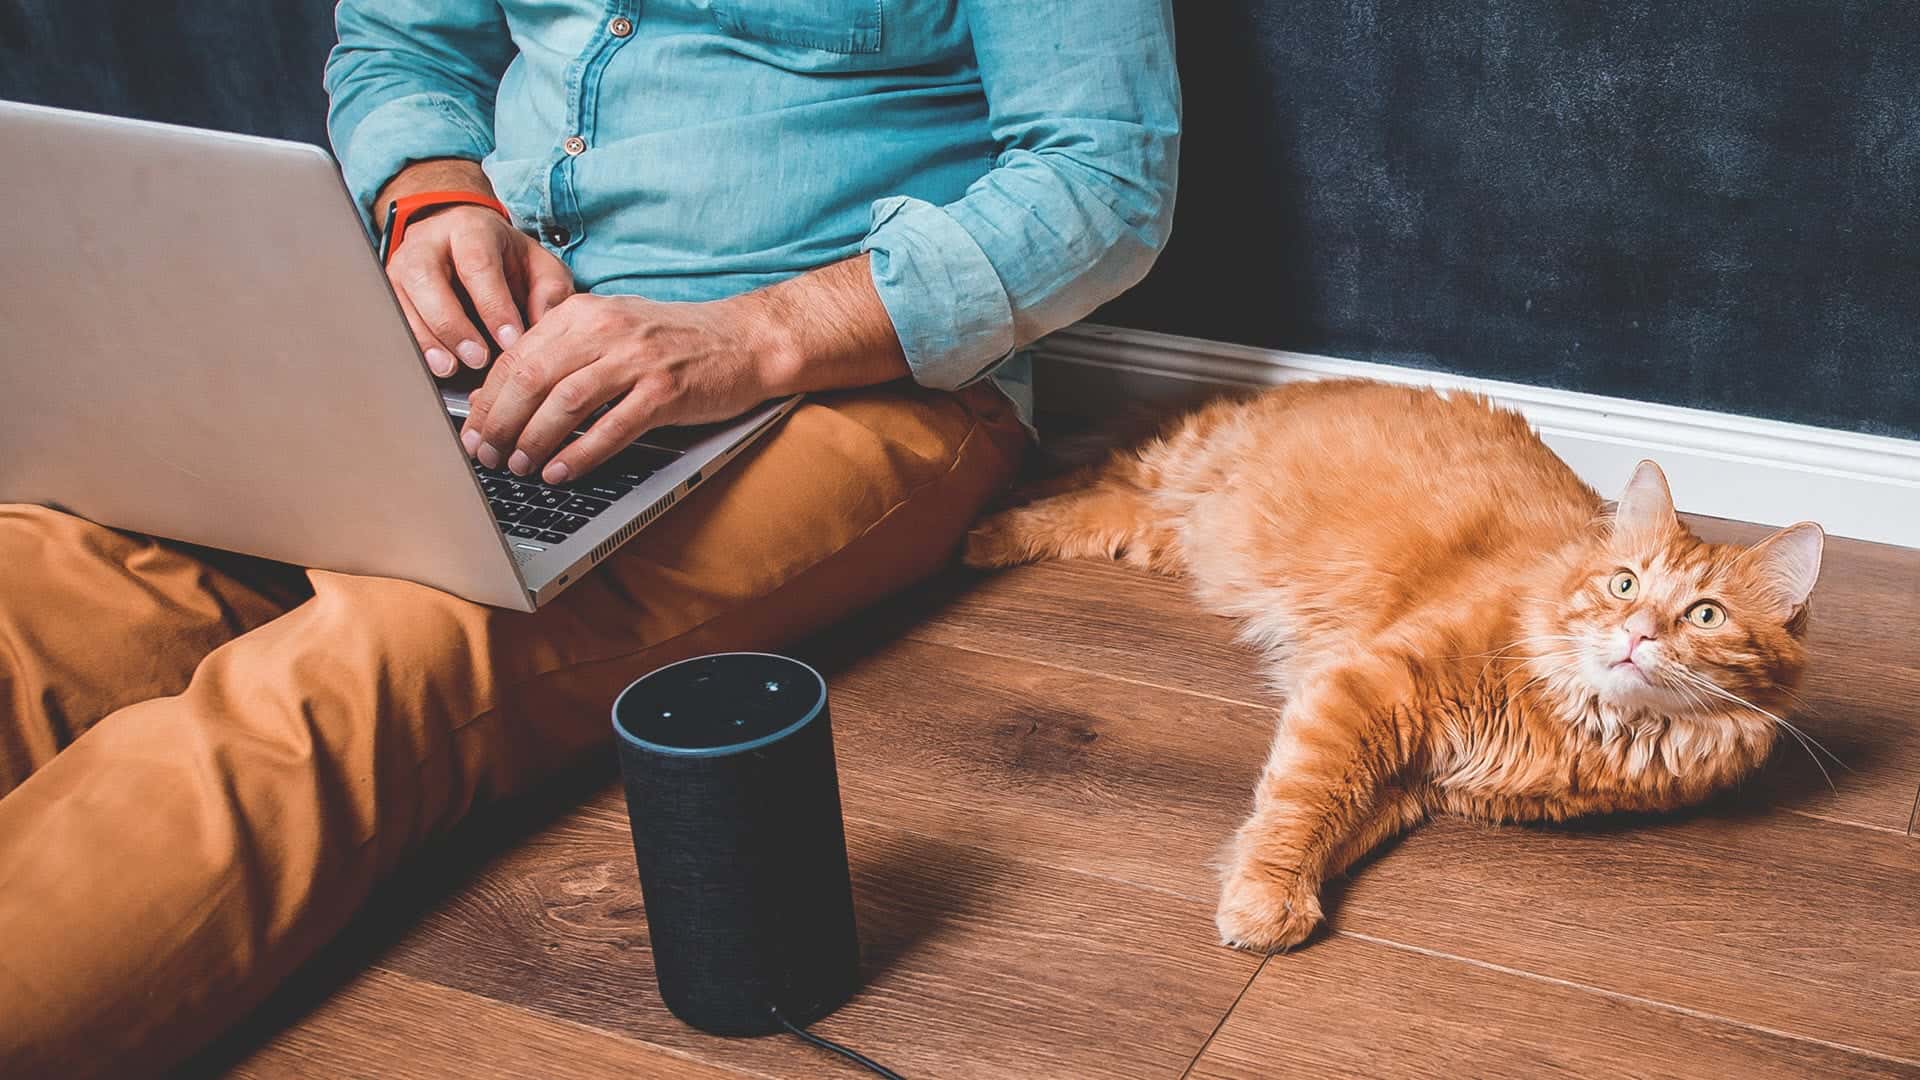 A man using an Amazon Echo next to a cat